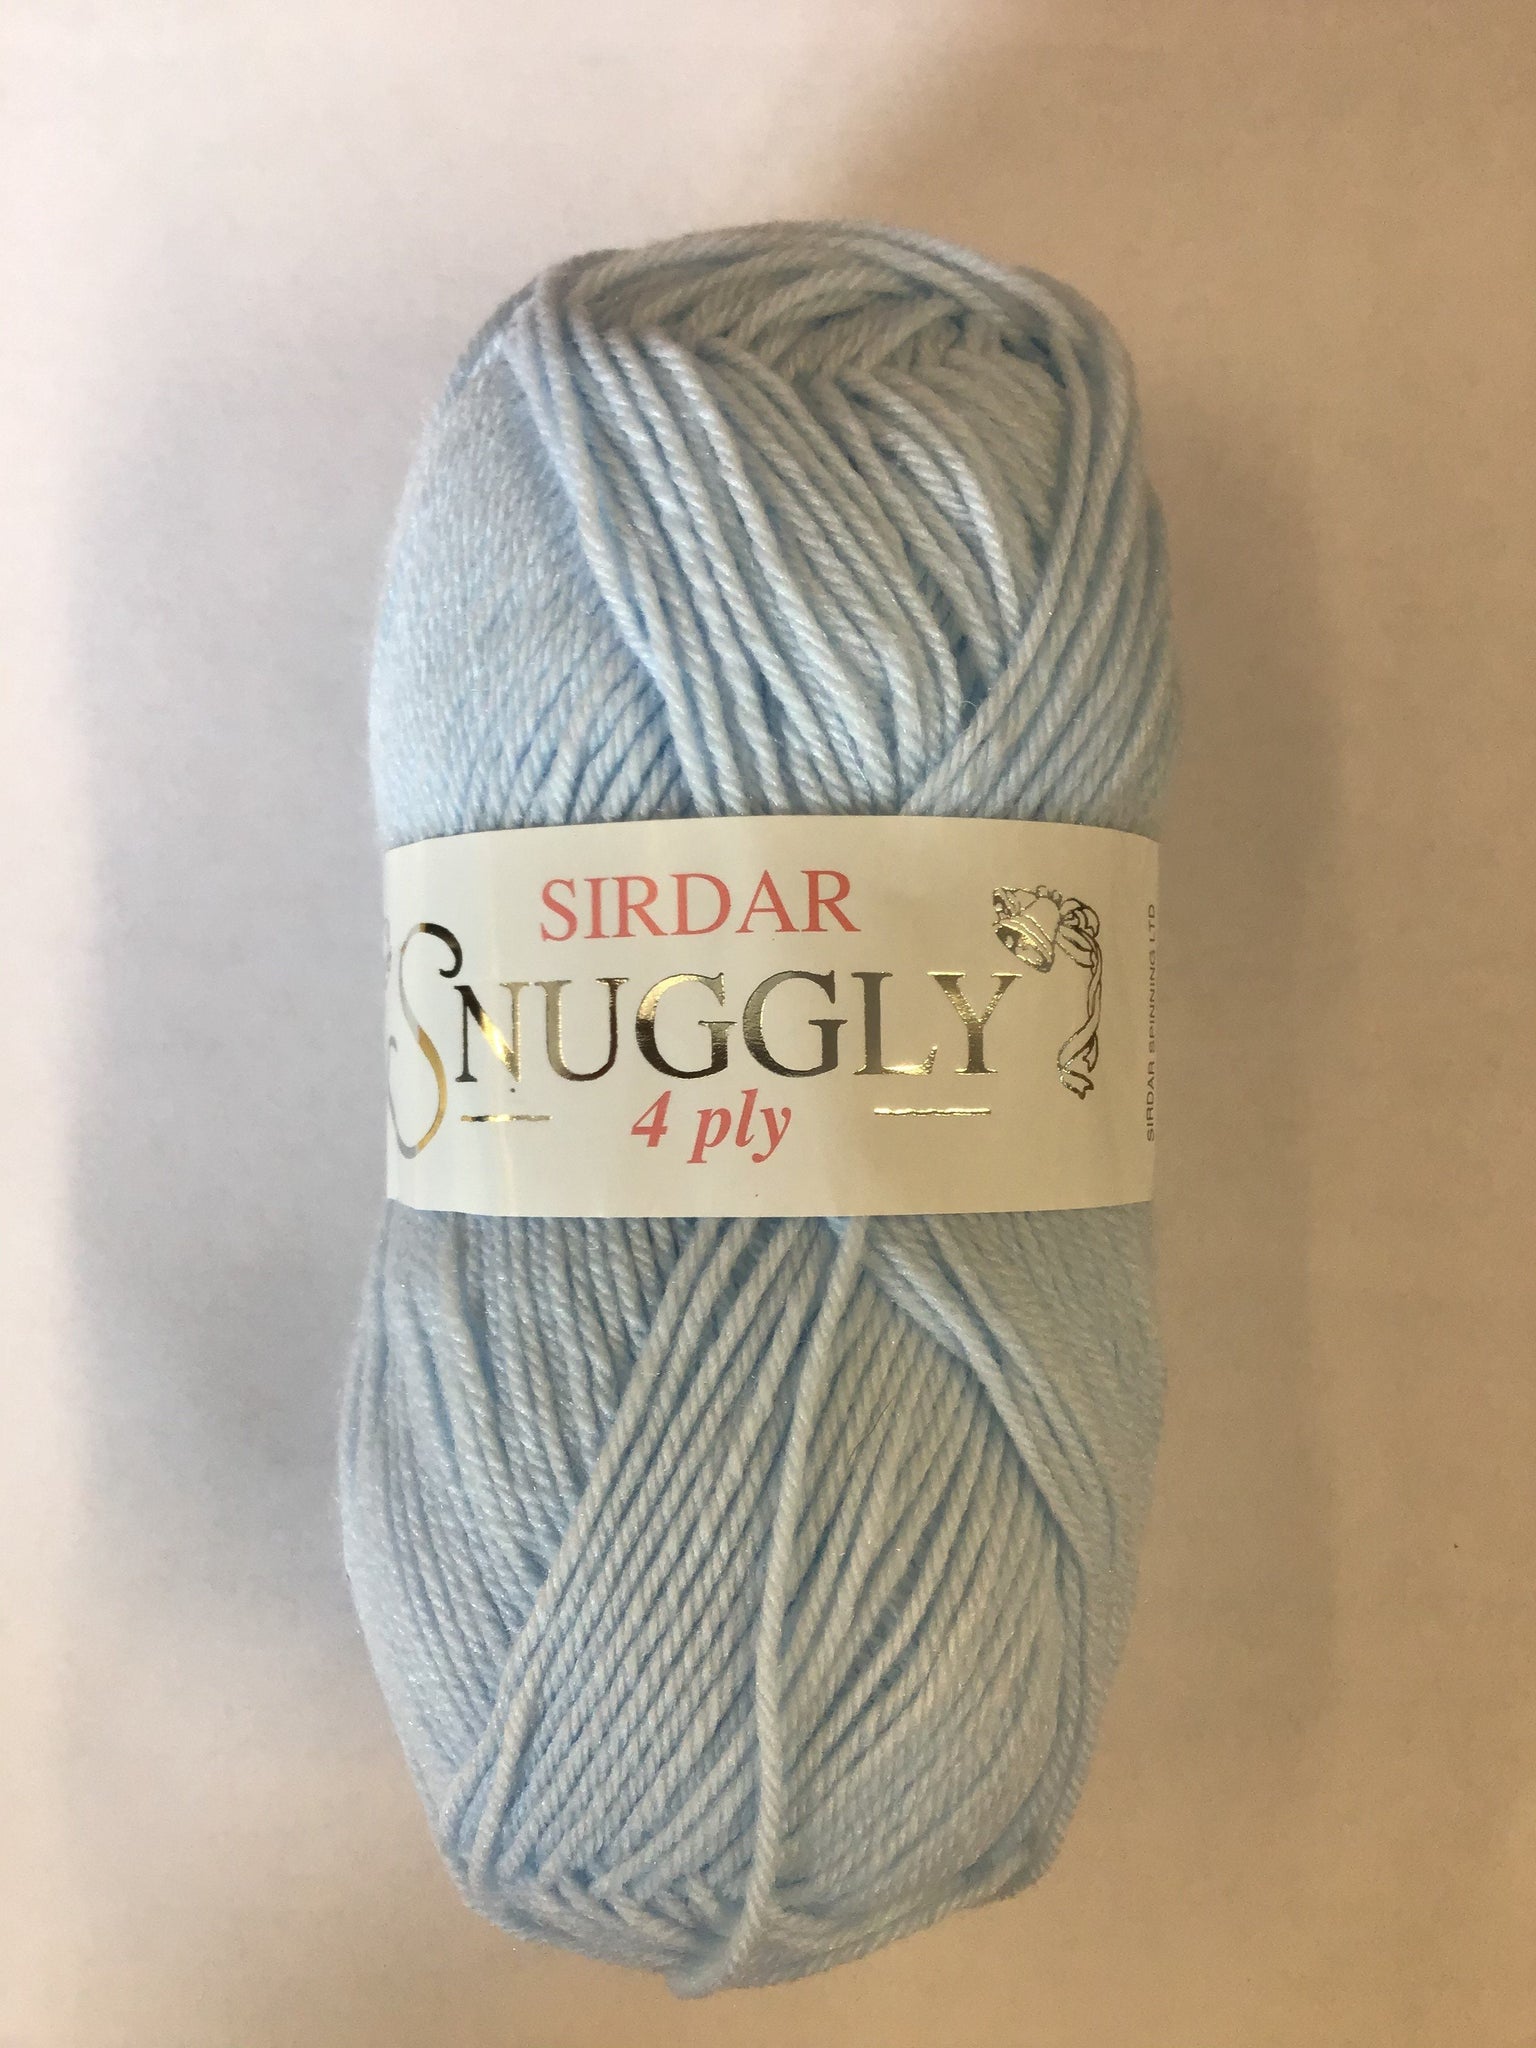 Sirdar Snuggly 4 ply 50g – The wool sak